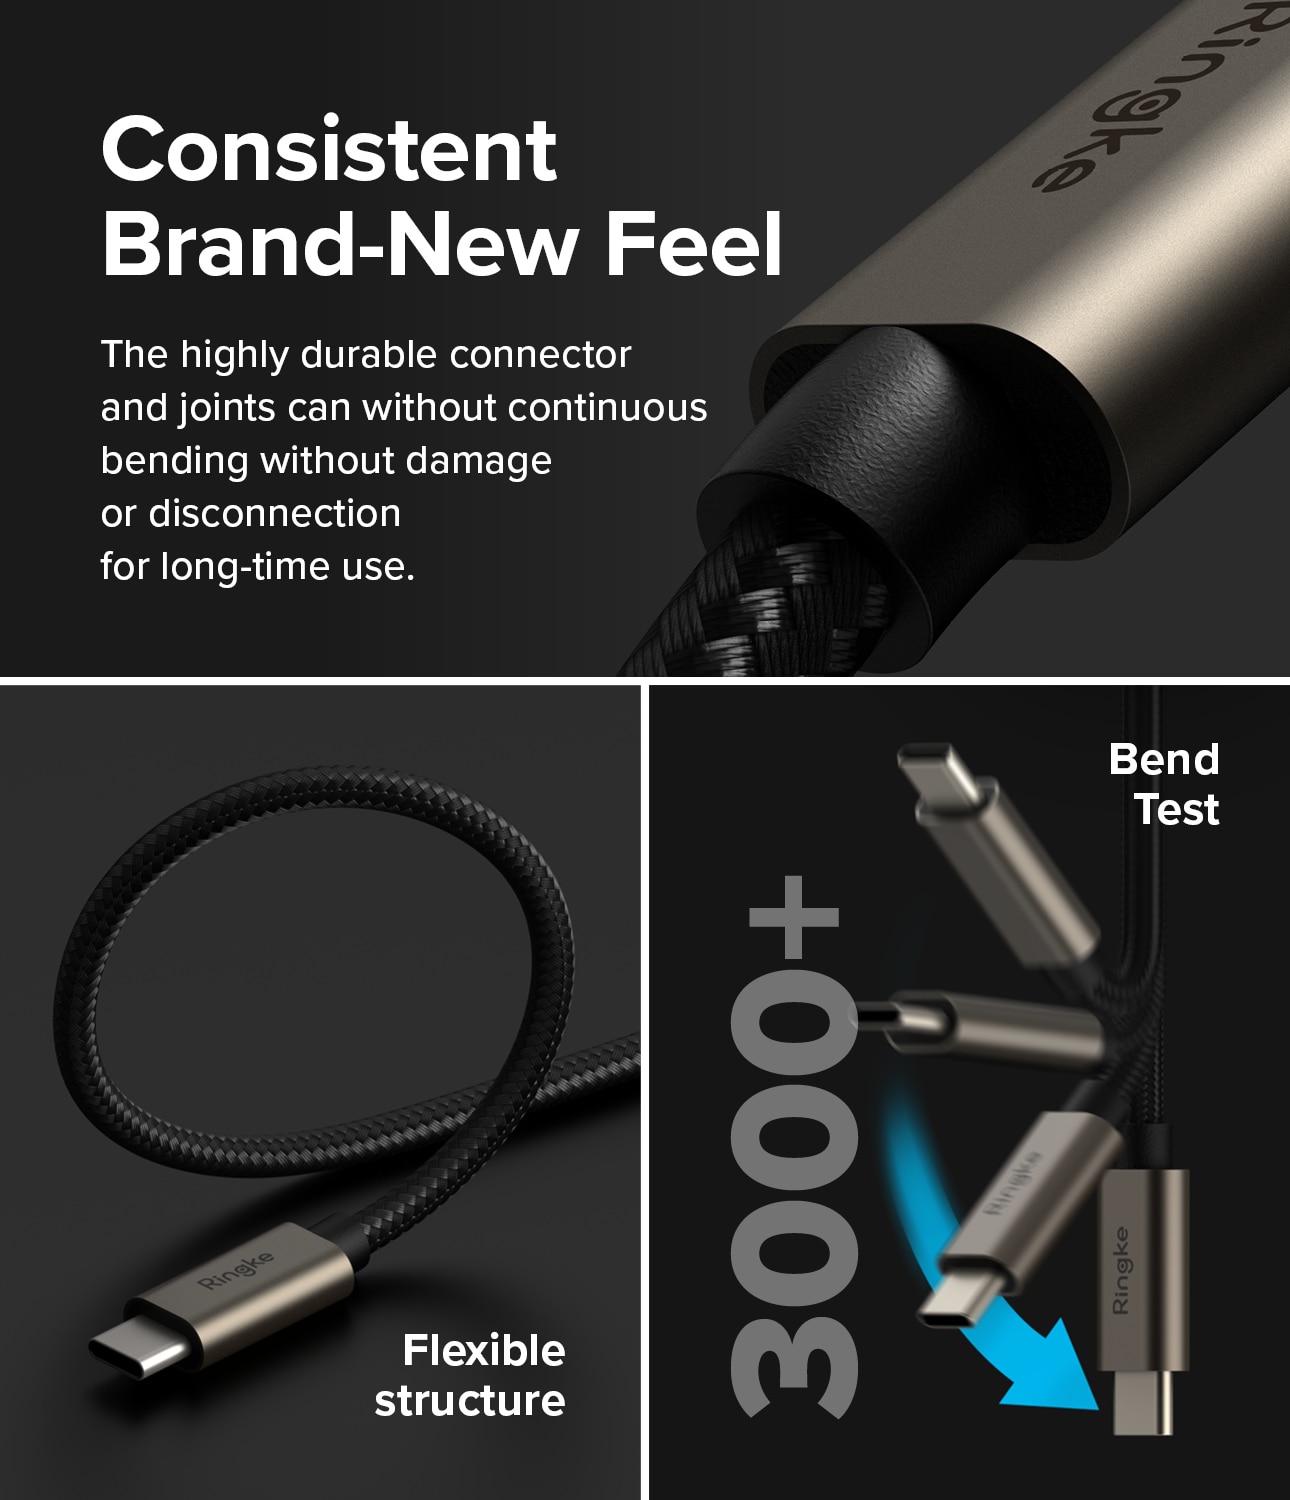 Fast Charging Basic Cable USB-C -> USB-C 1m, negro